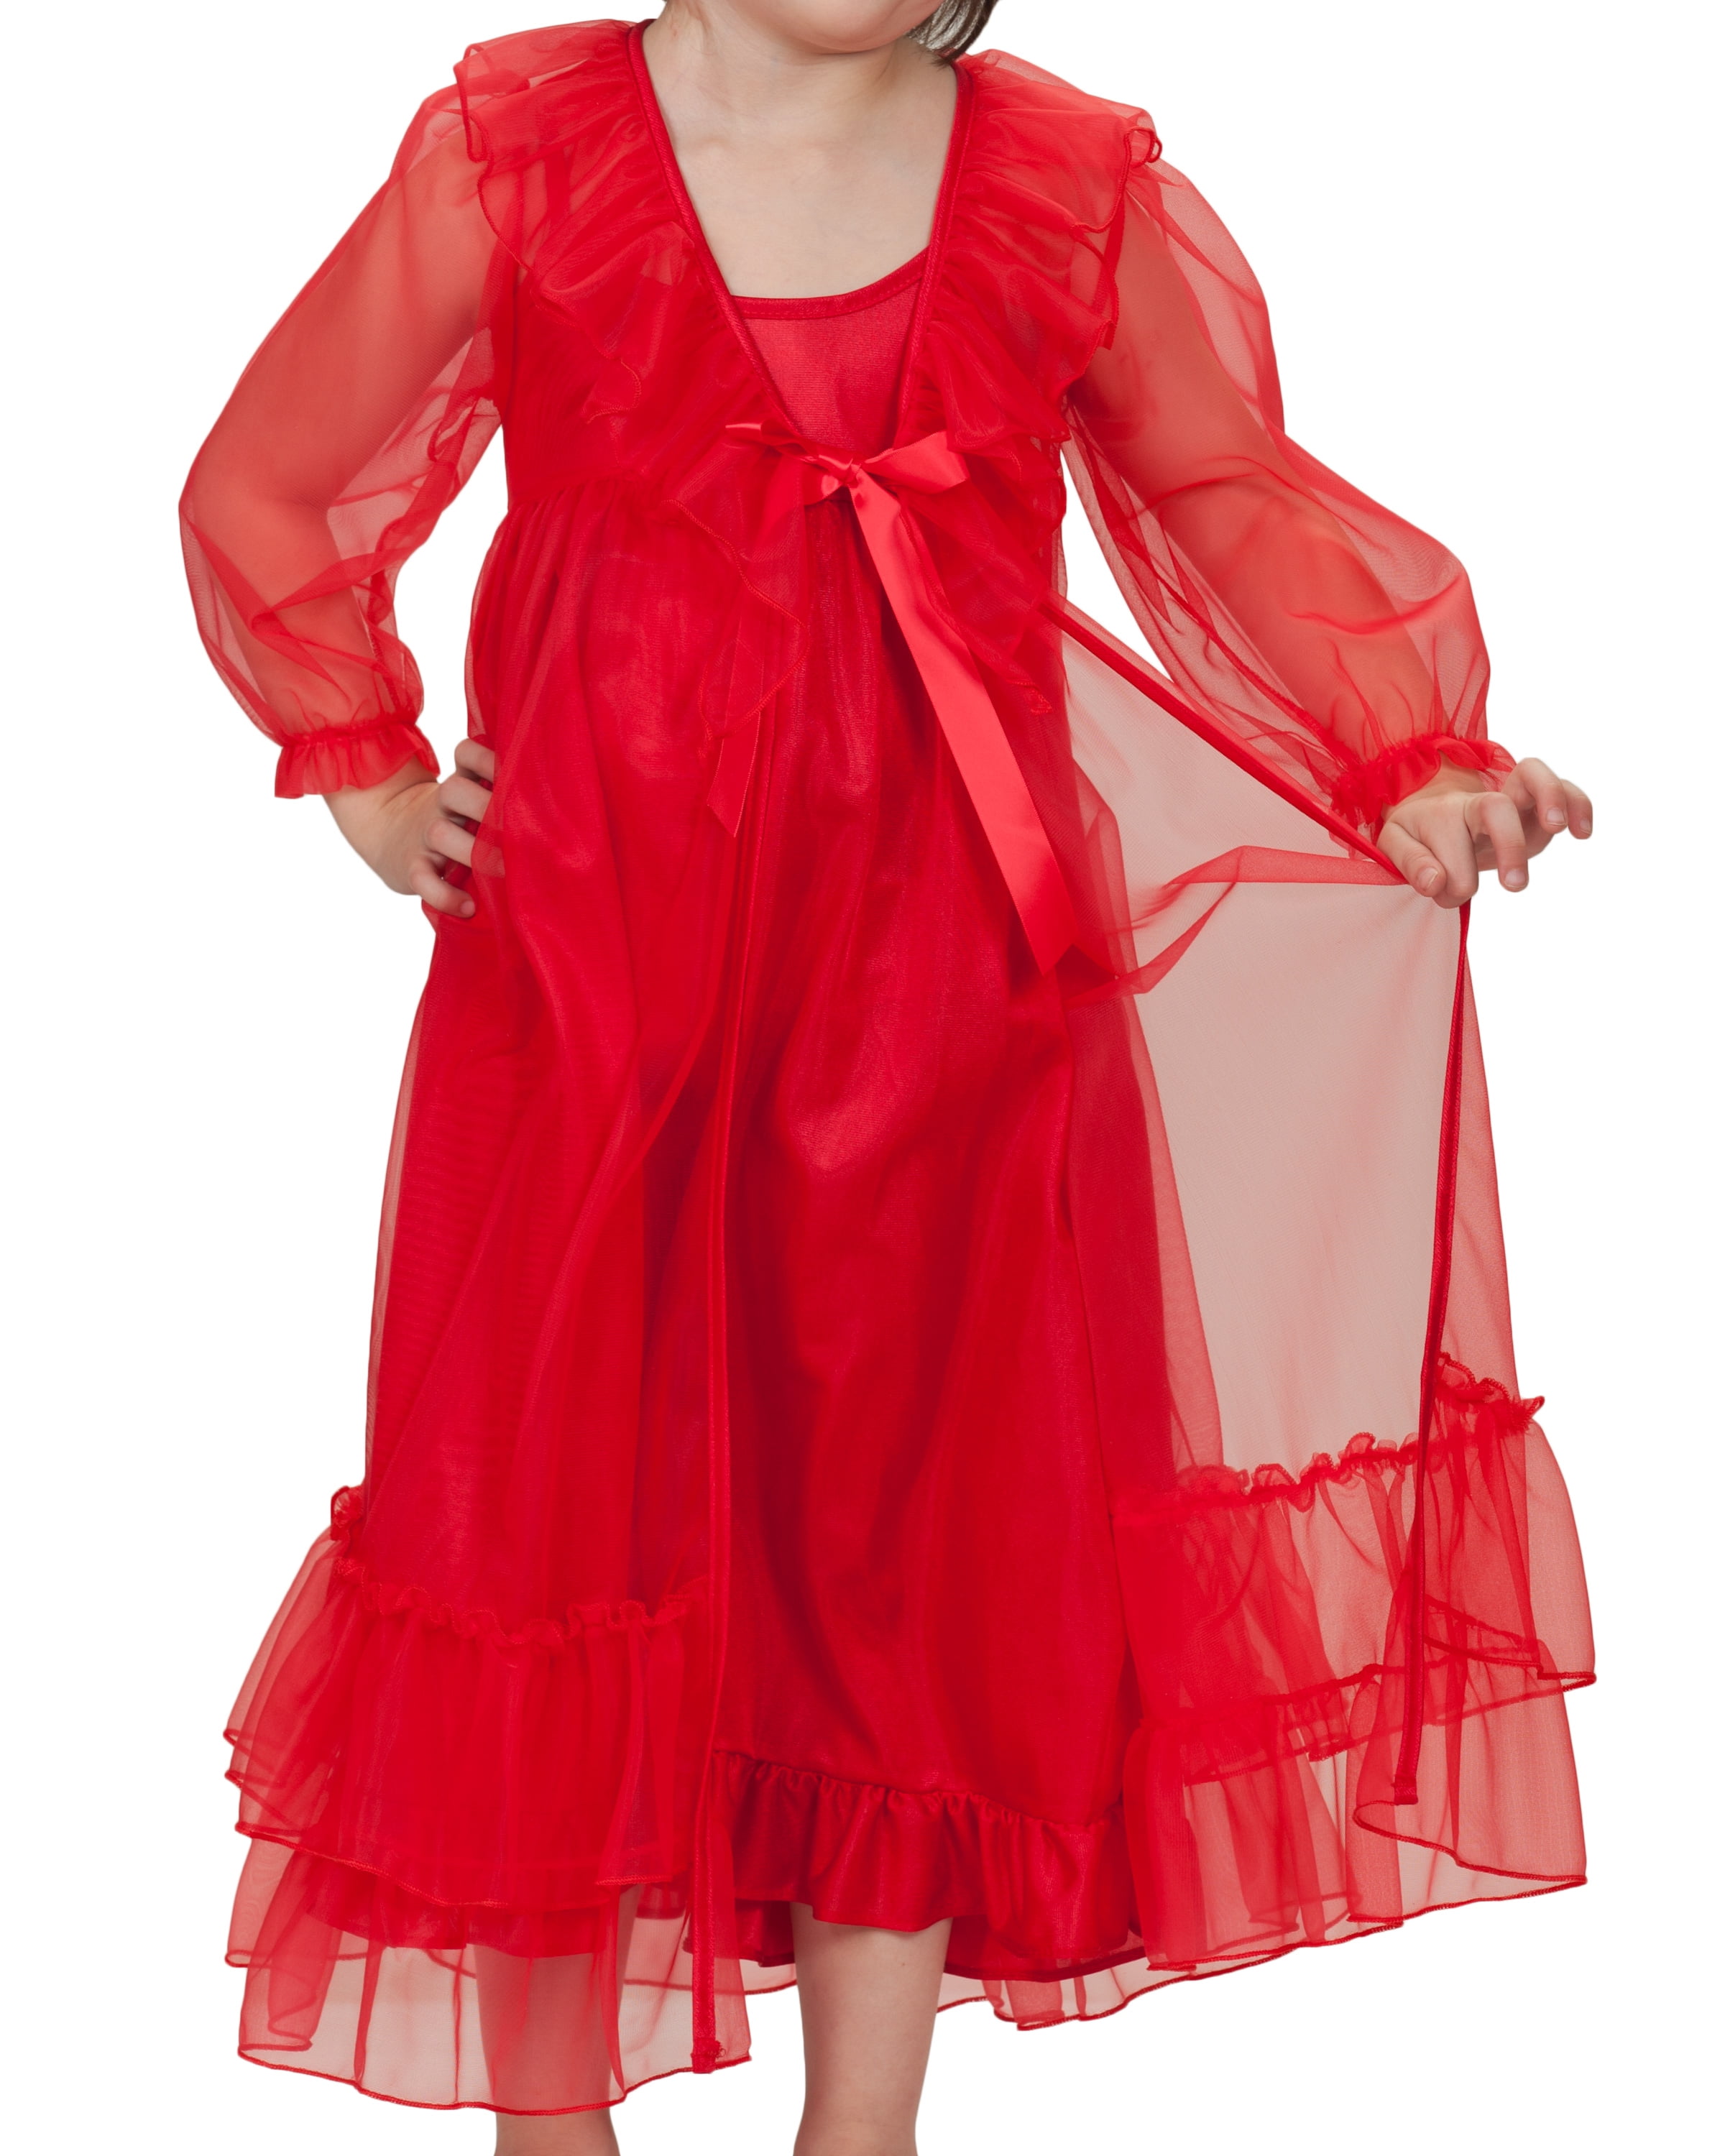 Pink Peignoir Set Toddler Nightgown Robe Girls Long Sleeve Nylon NWT Laura Dare 